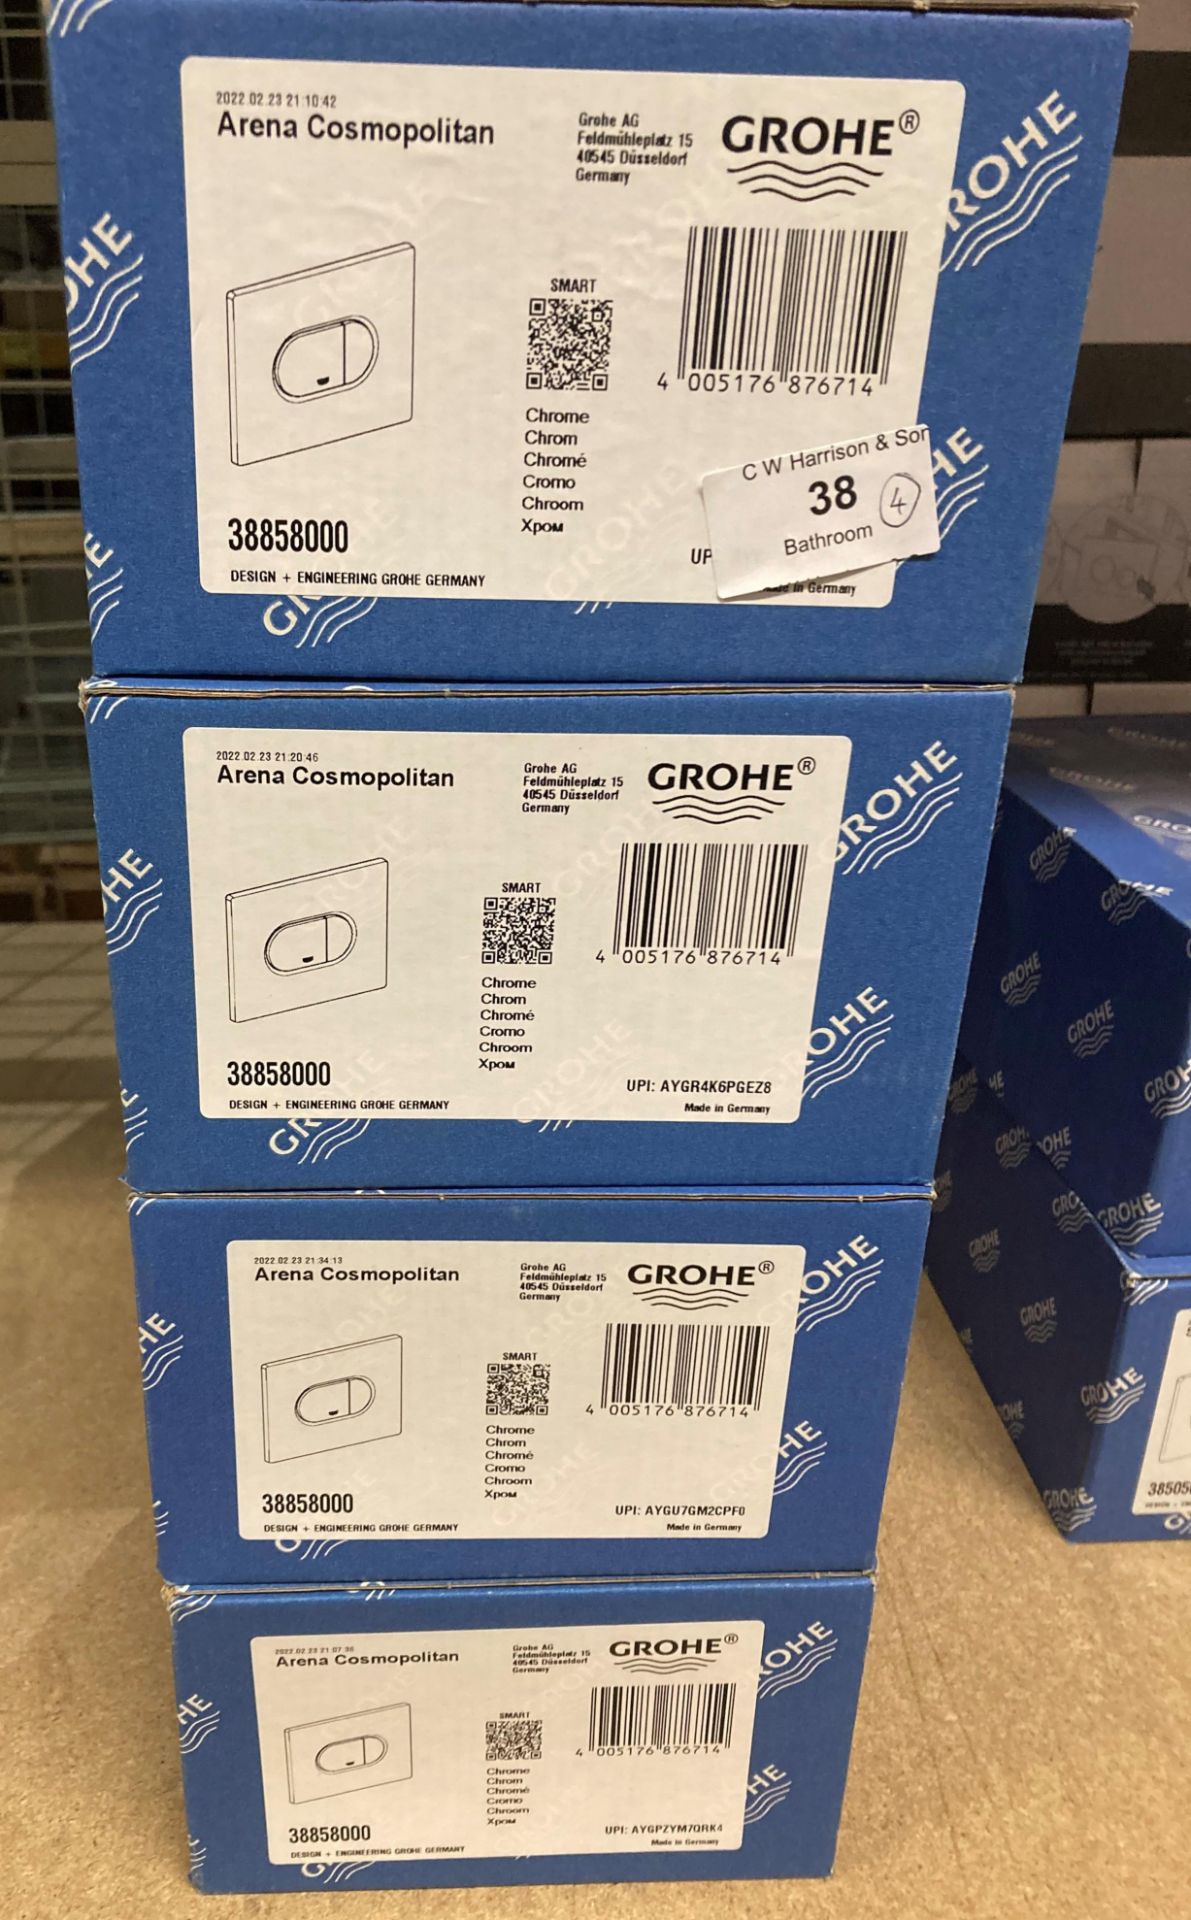 4 x Grohe Arena Cosmopolitan flush plates in chrome finish (saleroom location: AA08)